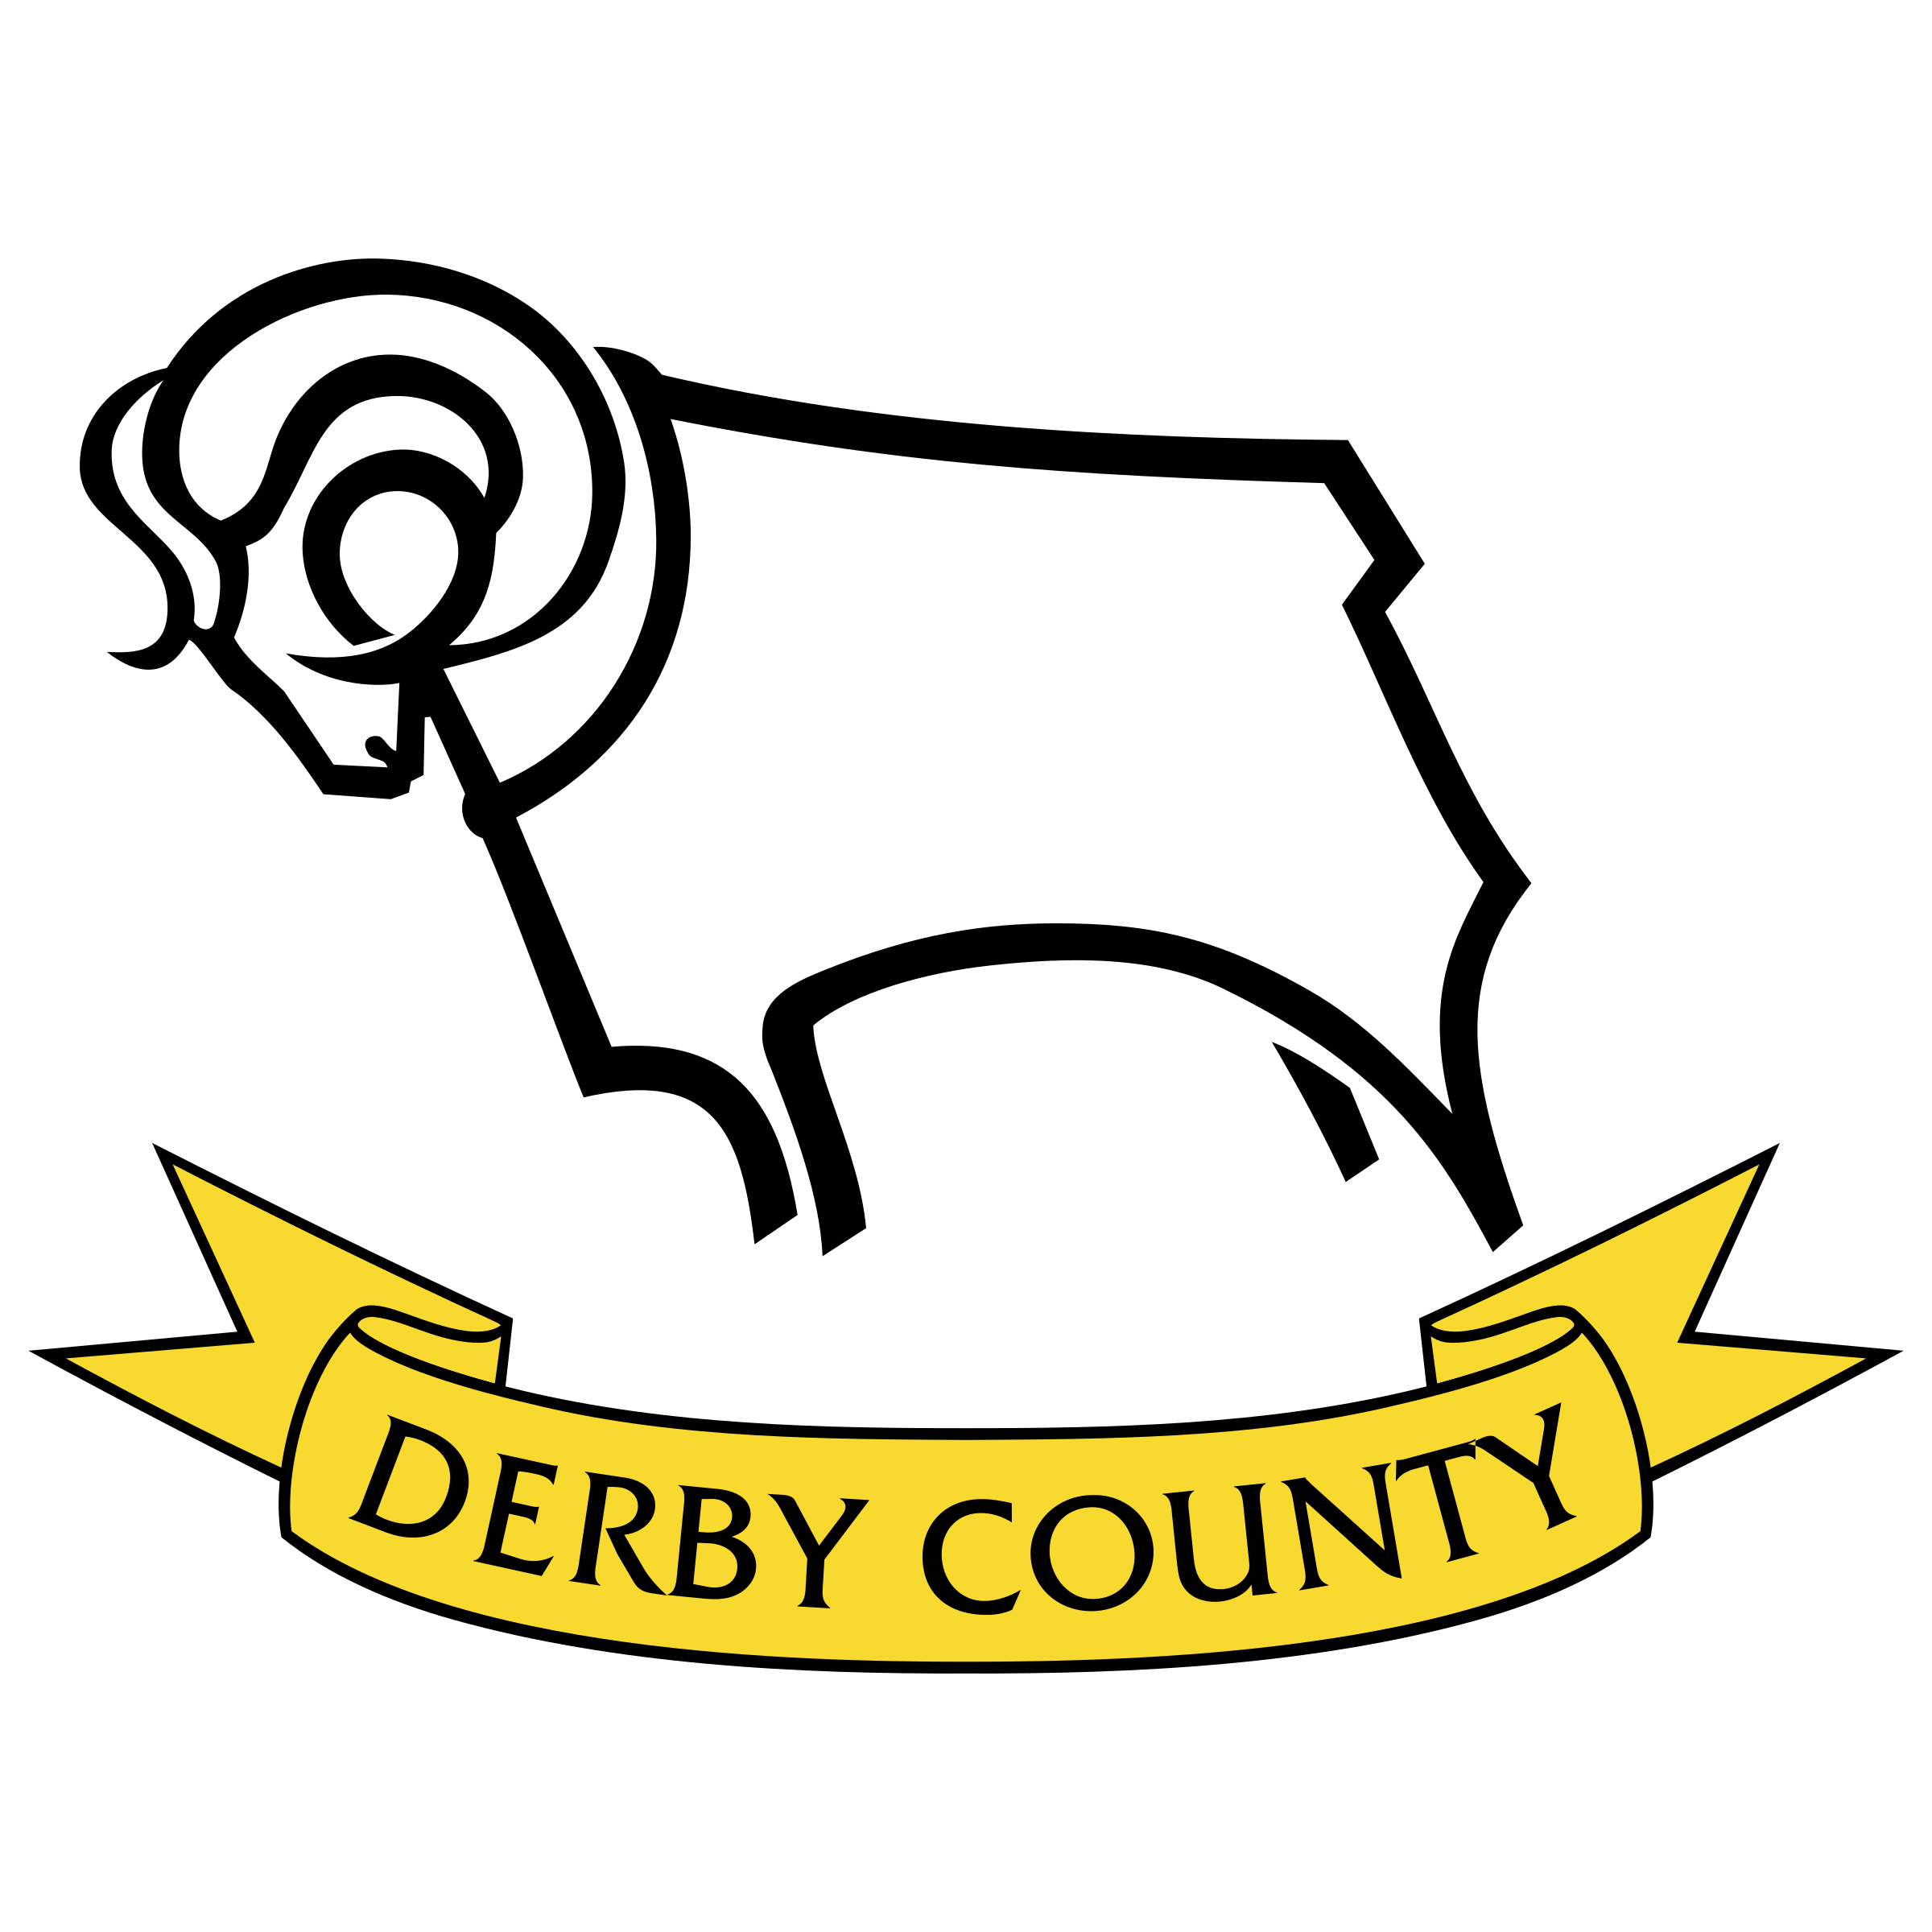 Derby Logo - Derby County FC Logo PNG Transparent & SVG Vector - Freebie Supply